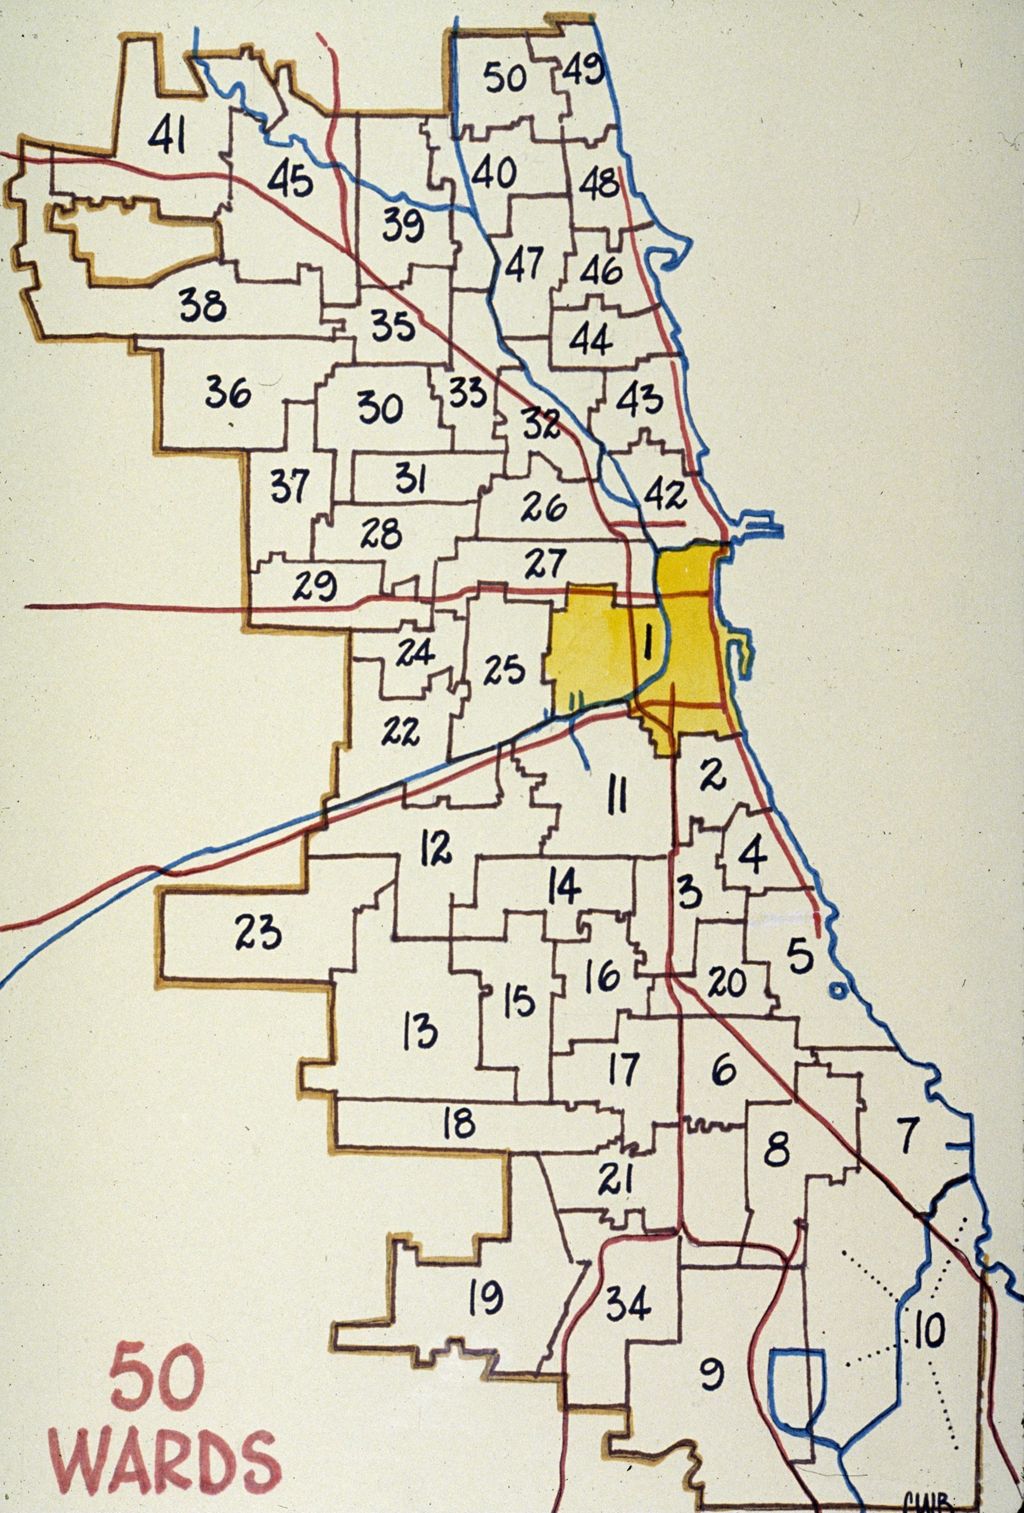 Chicago ward map